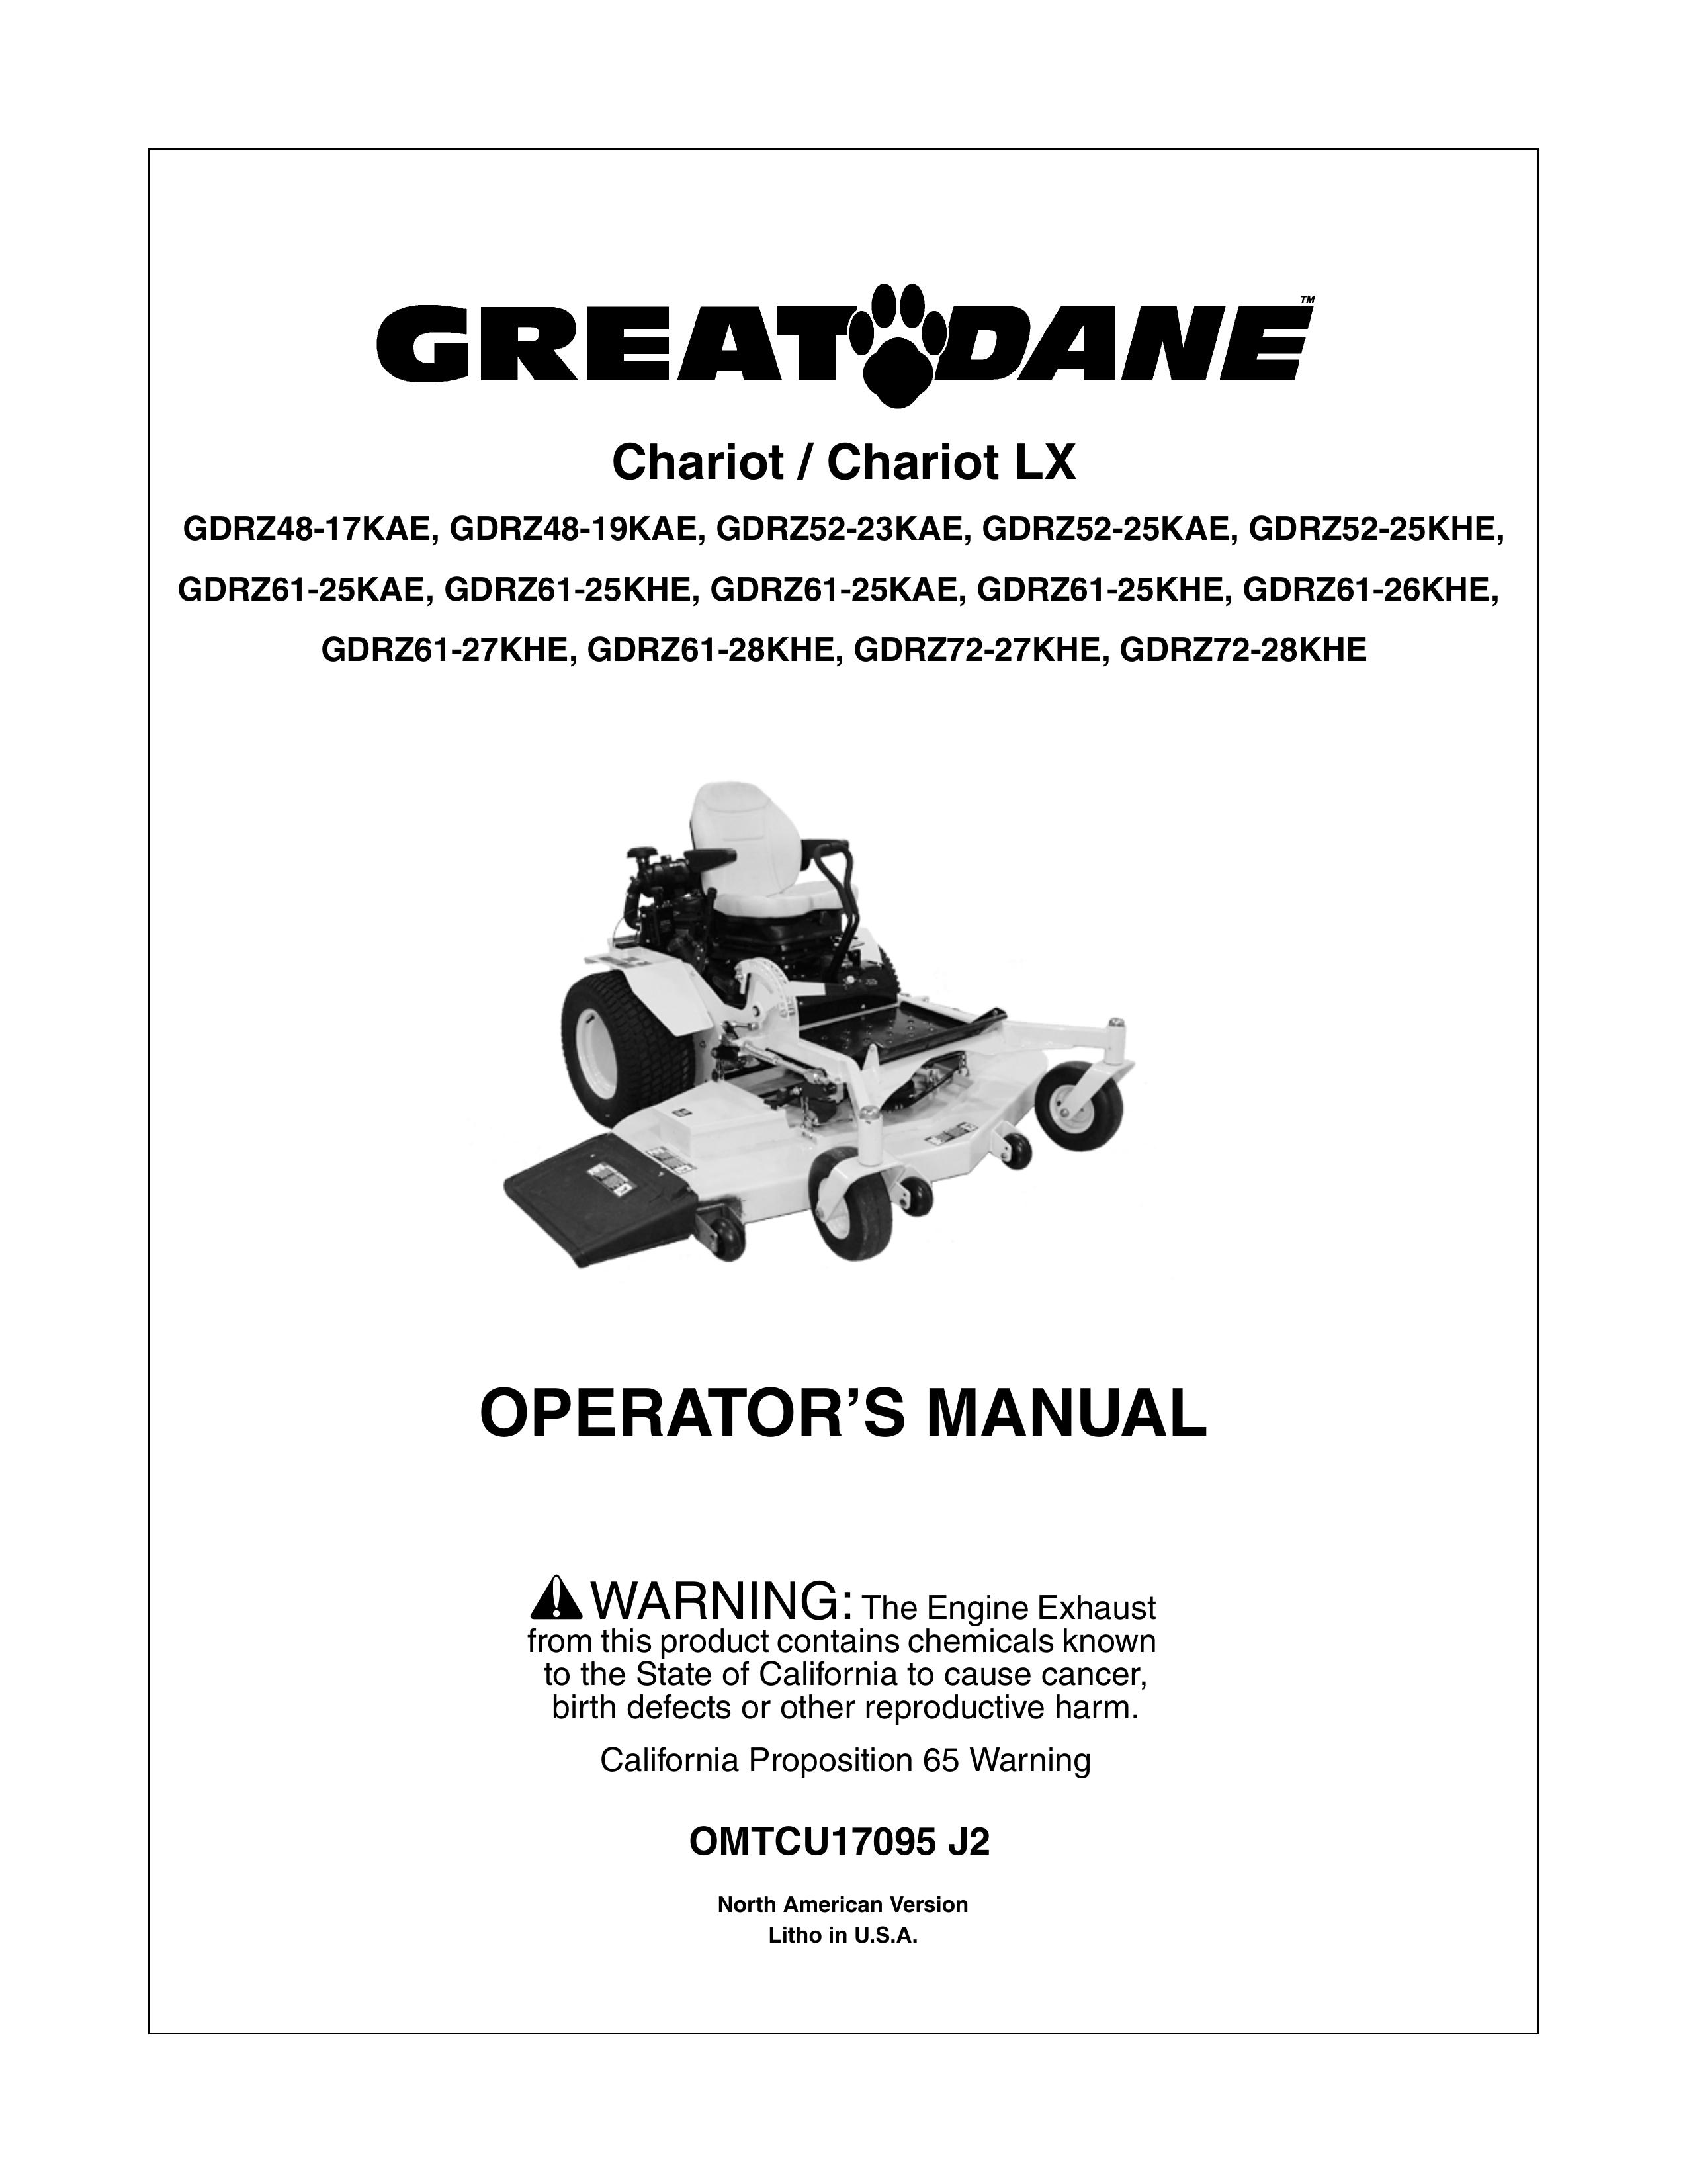 Great Dane GDRZ72-27KHE Lawn Mower User Manual